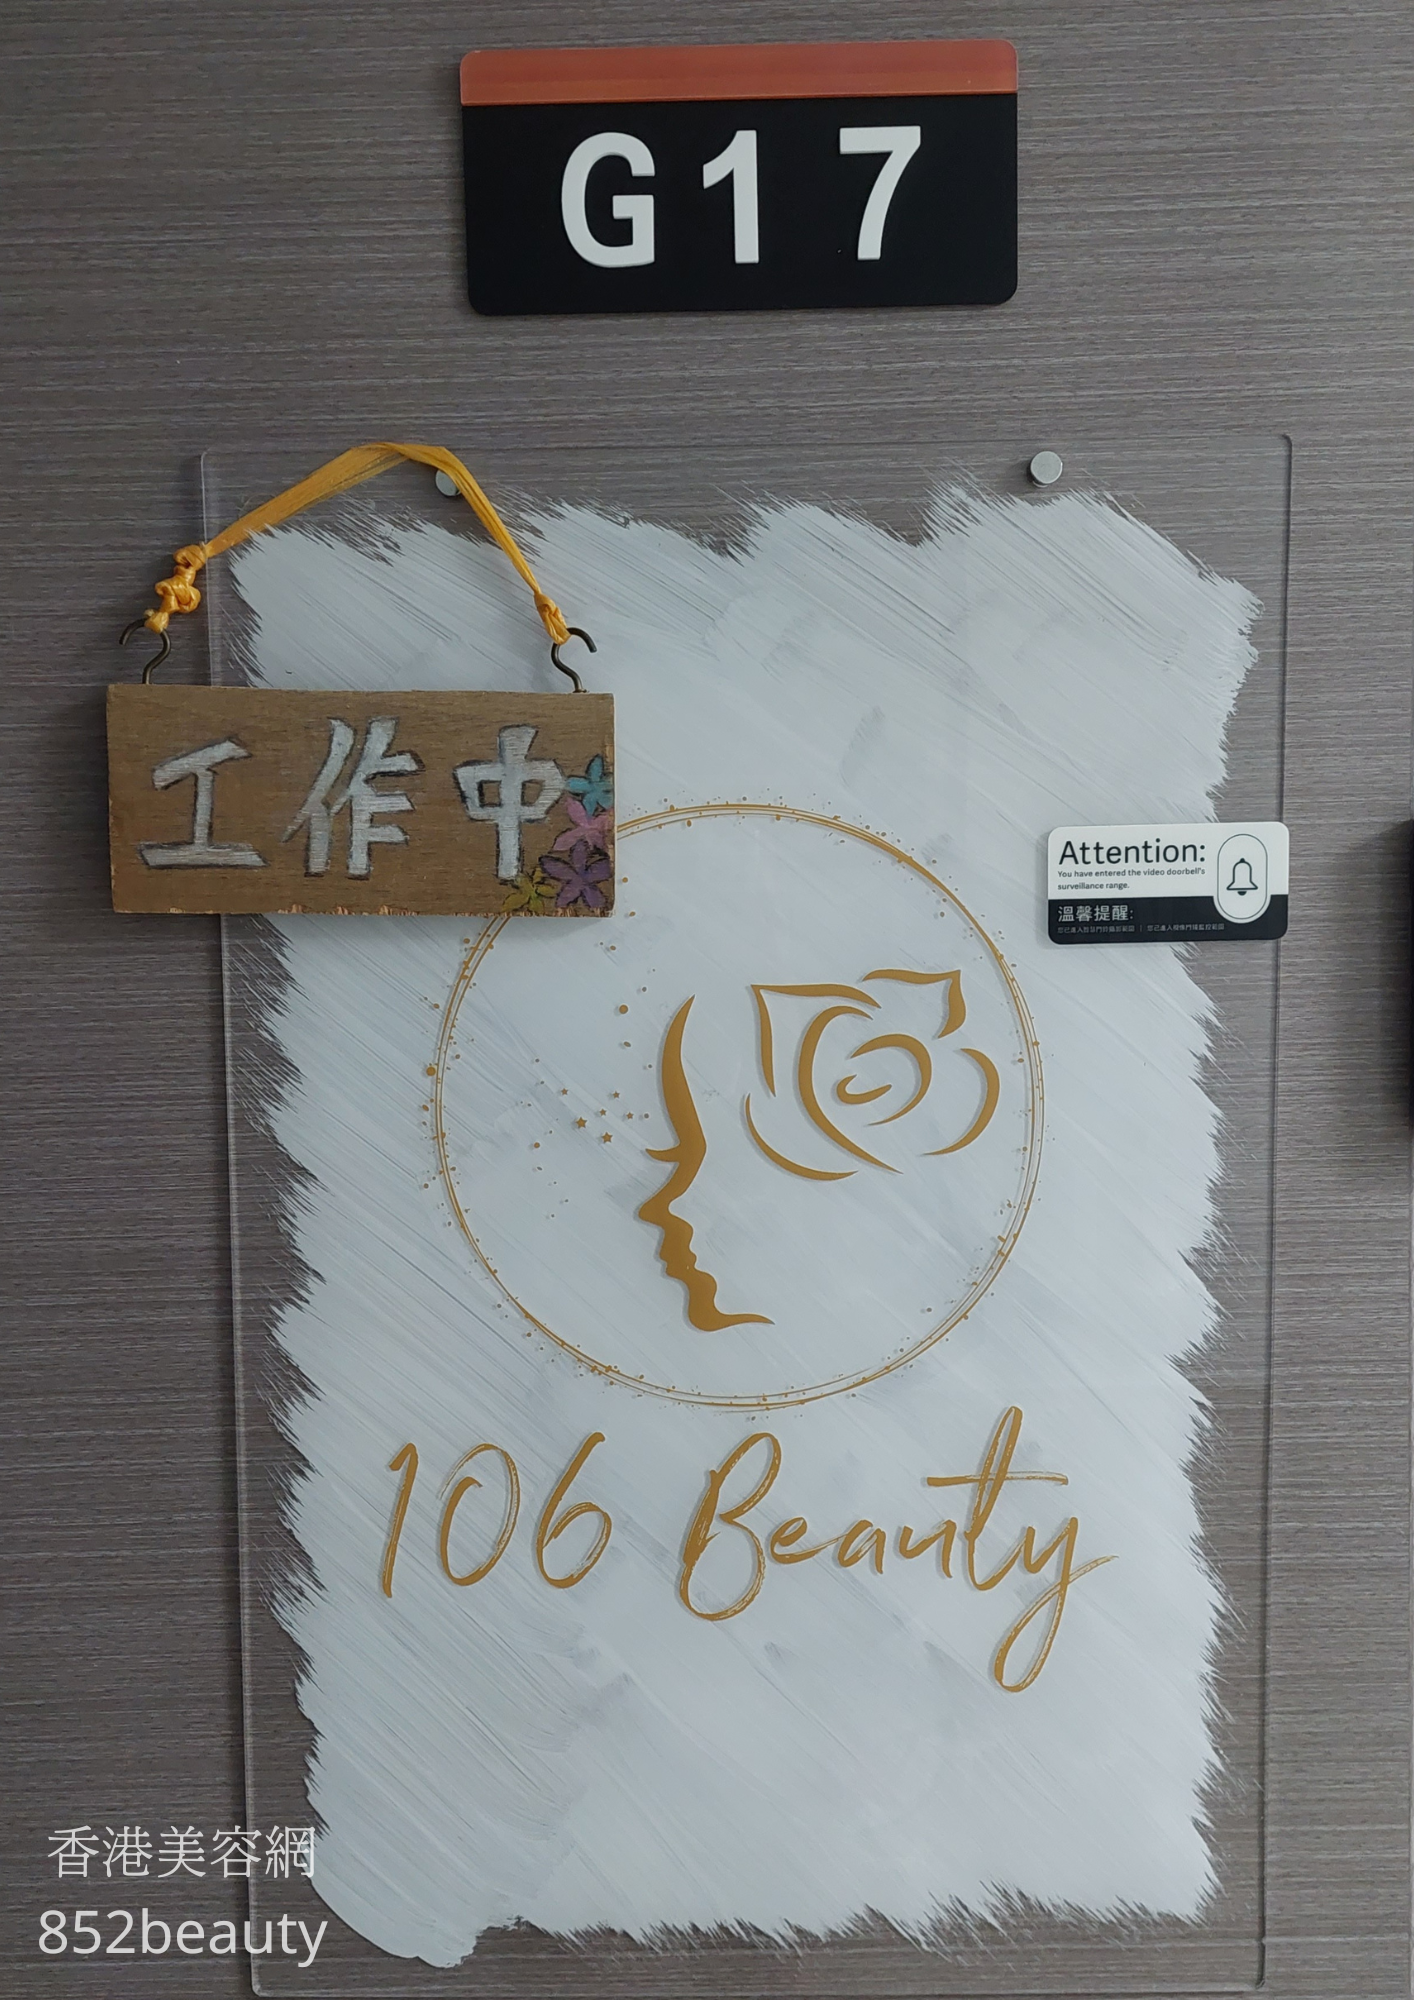 Eye Care: 106 Beauty